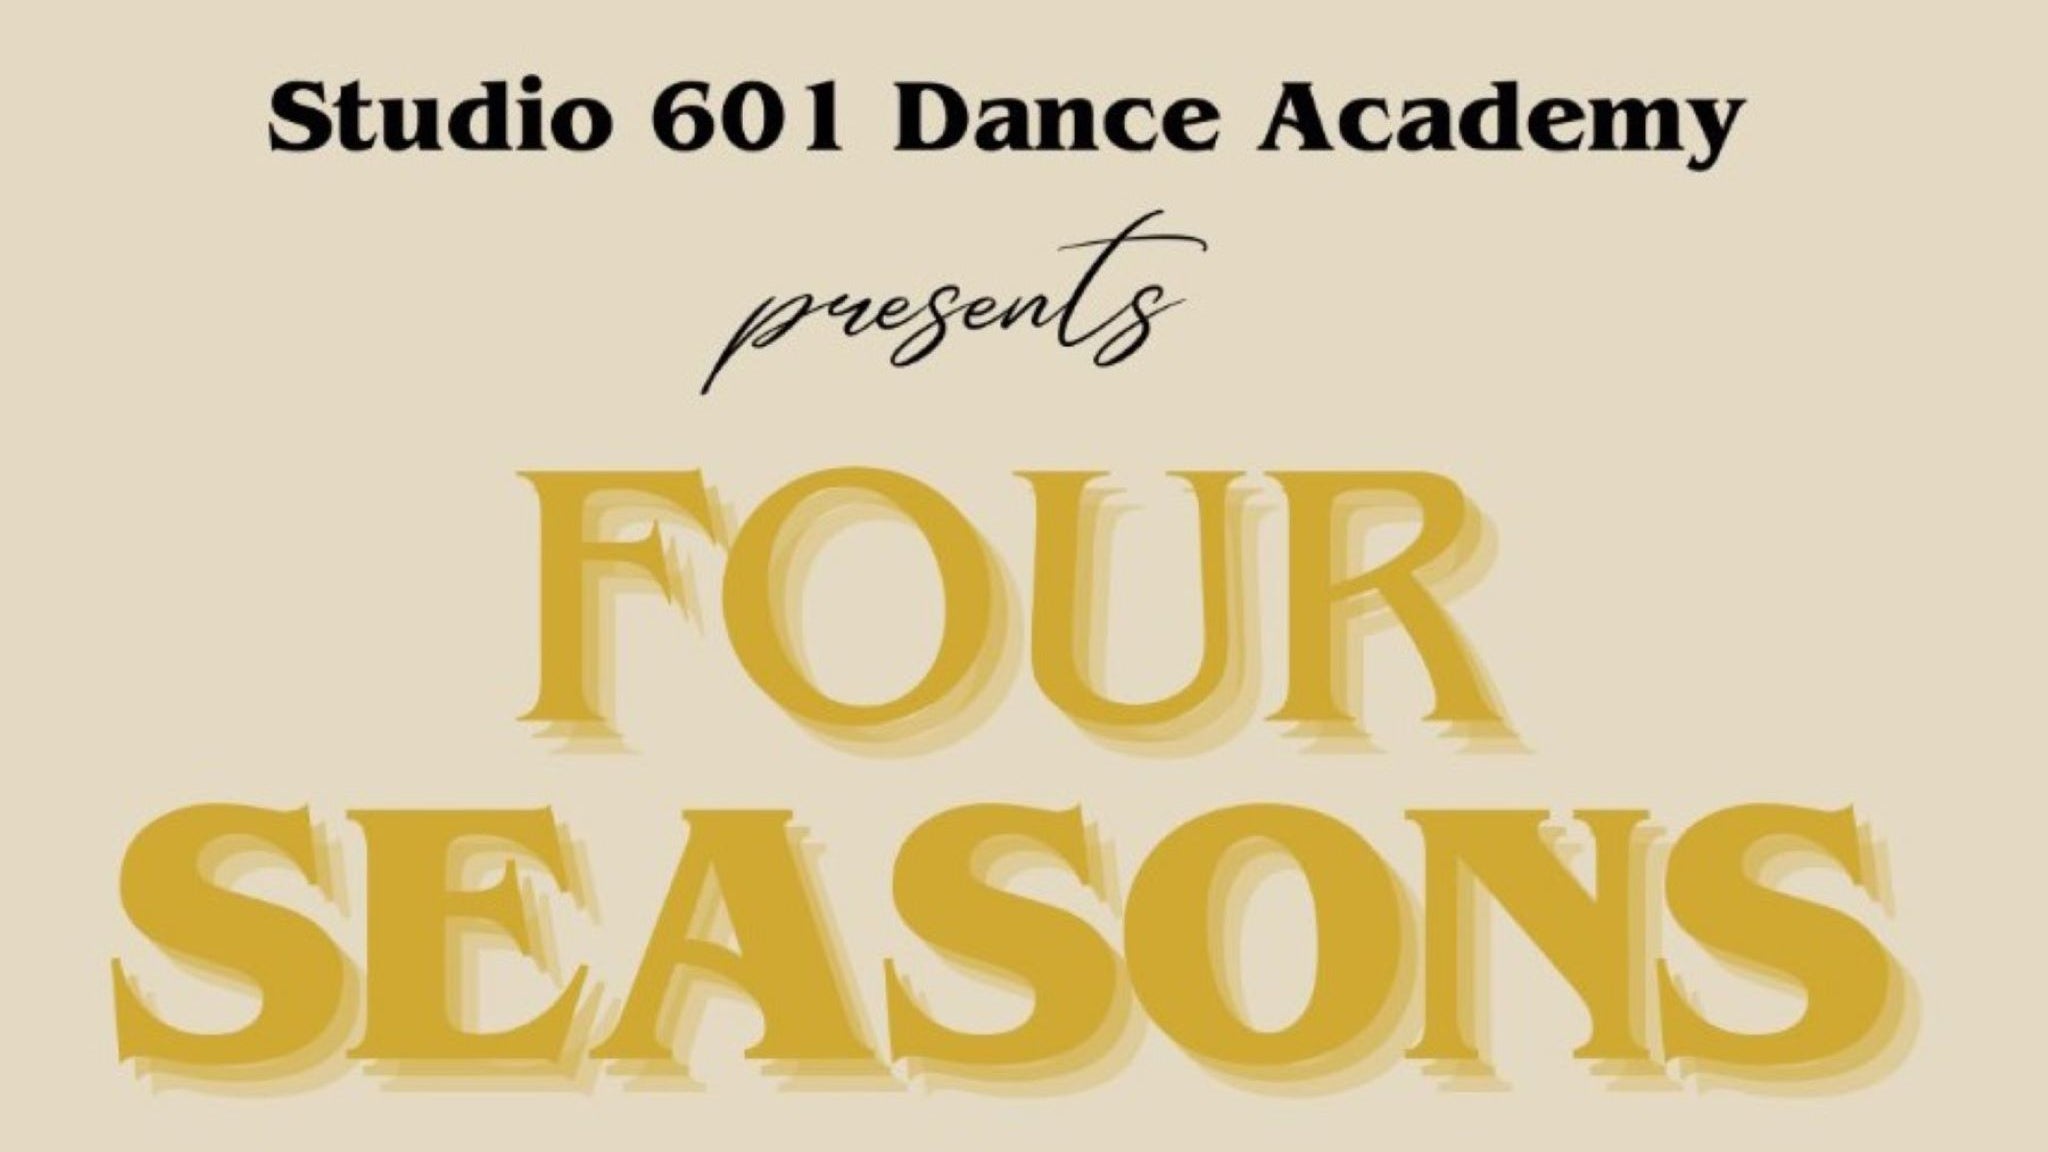 Studio 601 Dance Academy presents Four Seasons